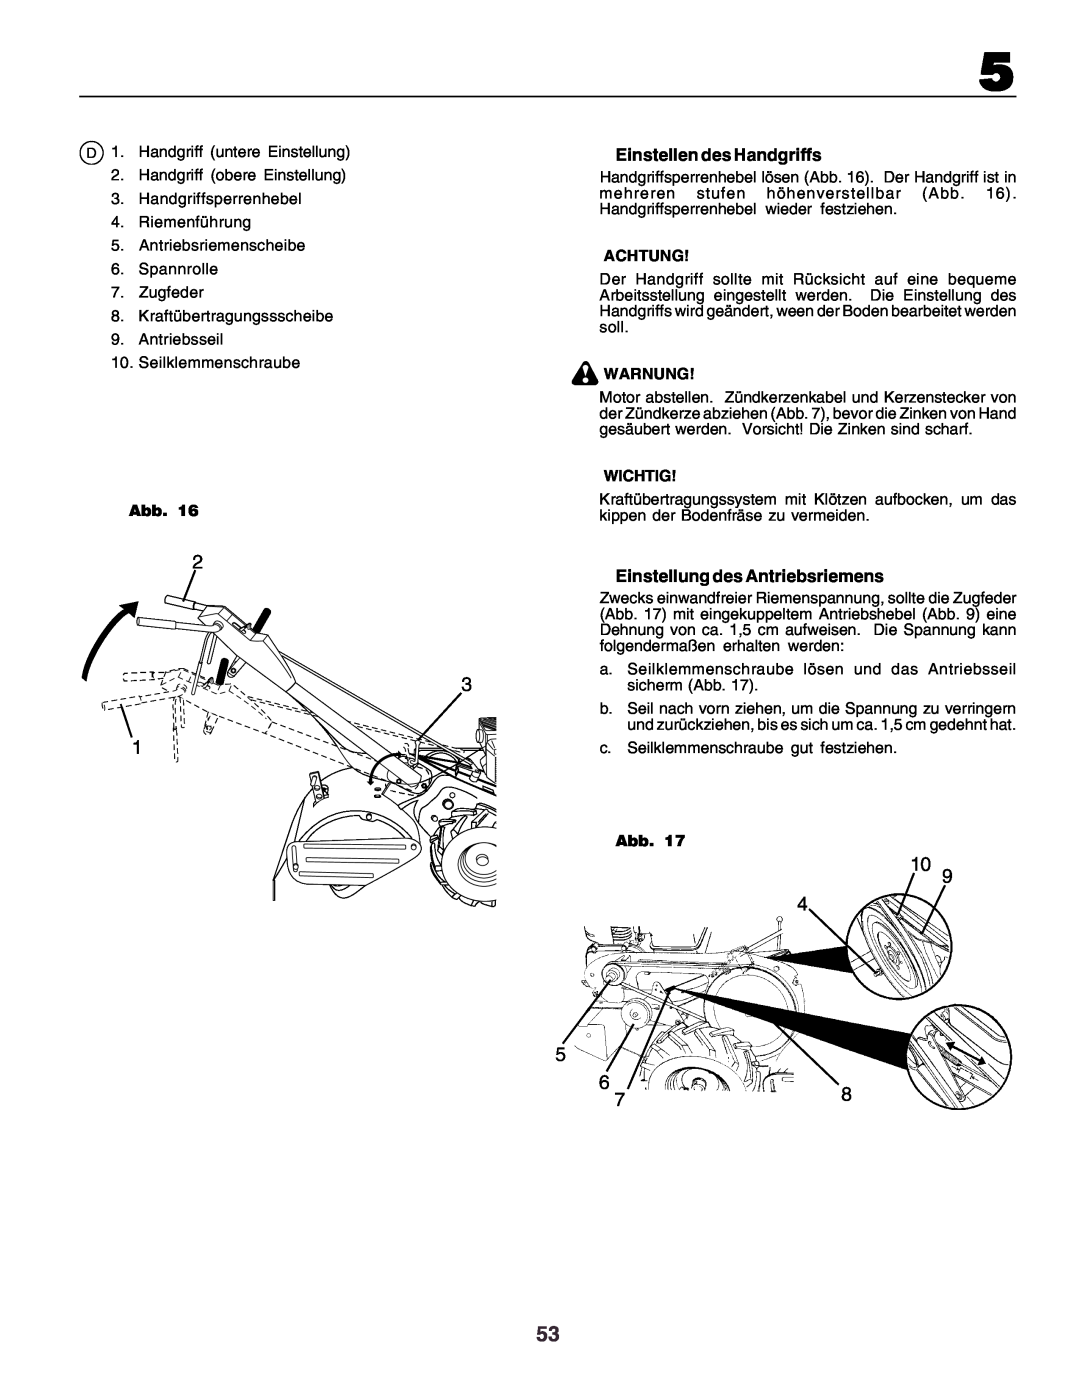 Husqvarna crt51 instruction manual Abb, Achtung, Warnung, Wichtig 